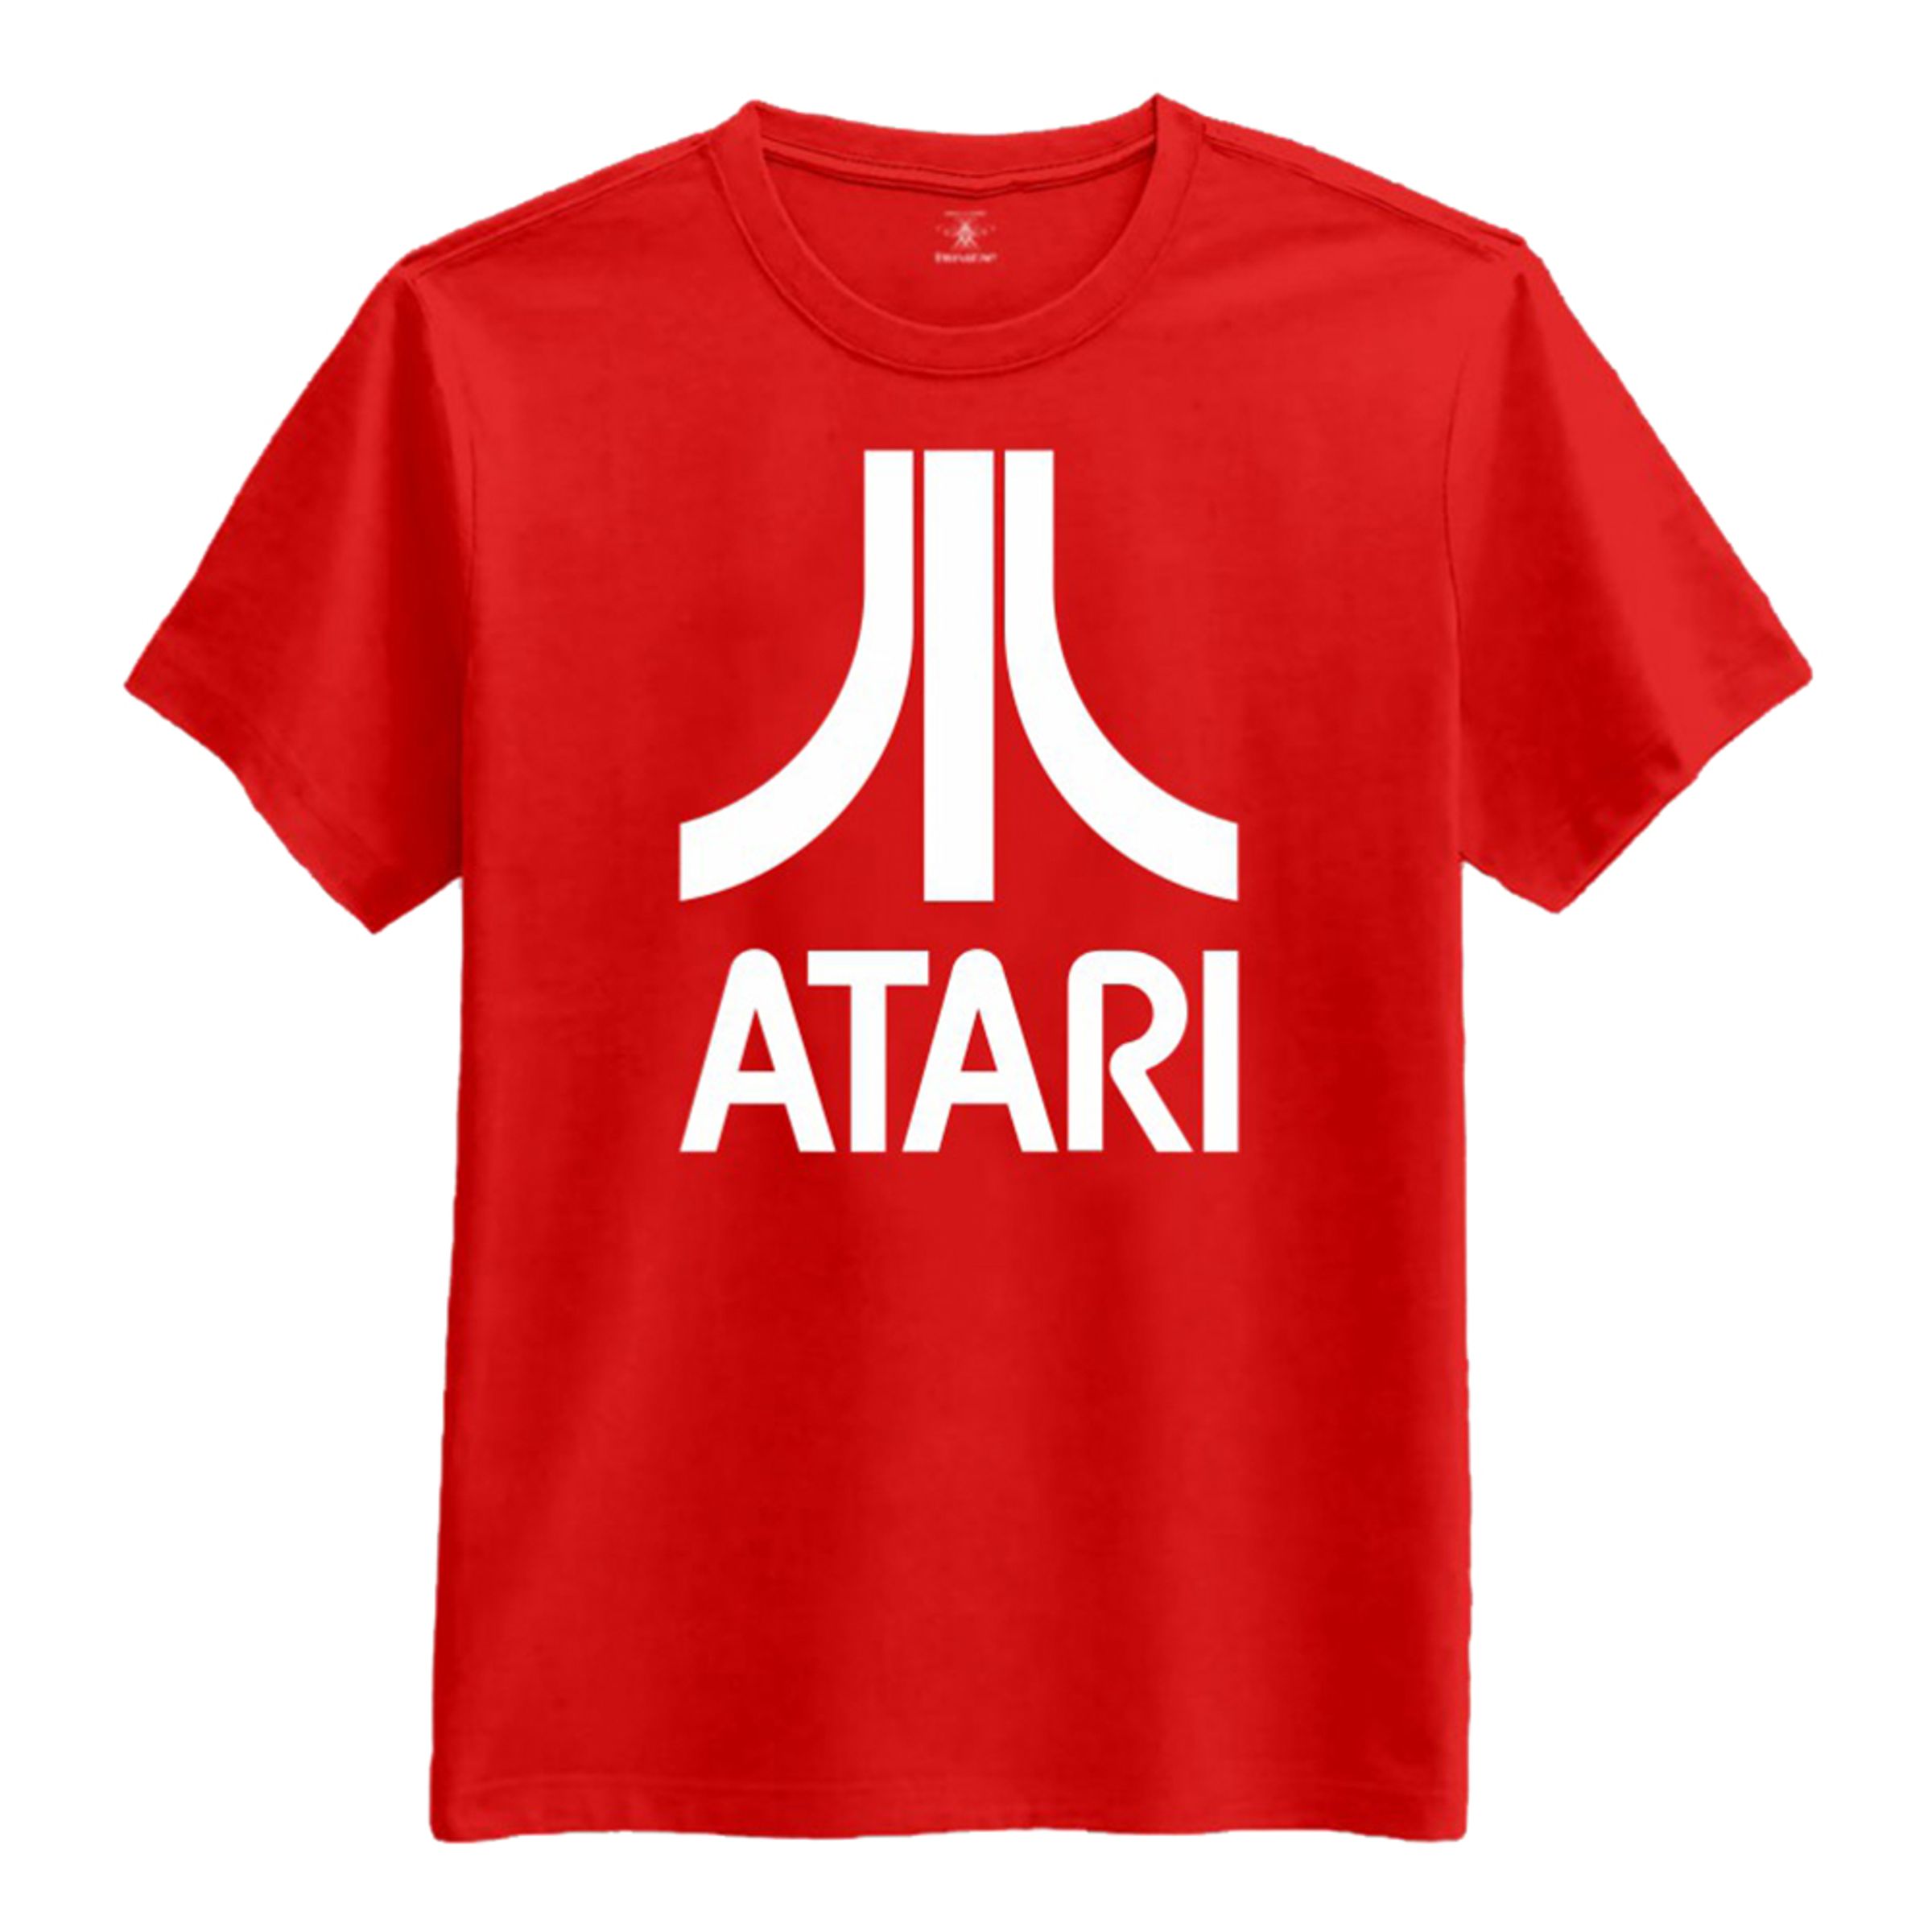 Atari T-shirt - Large